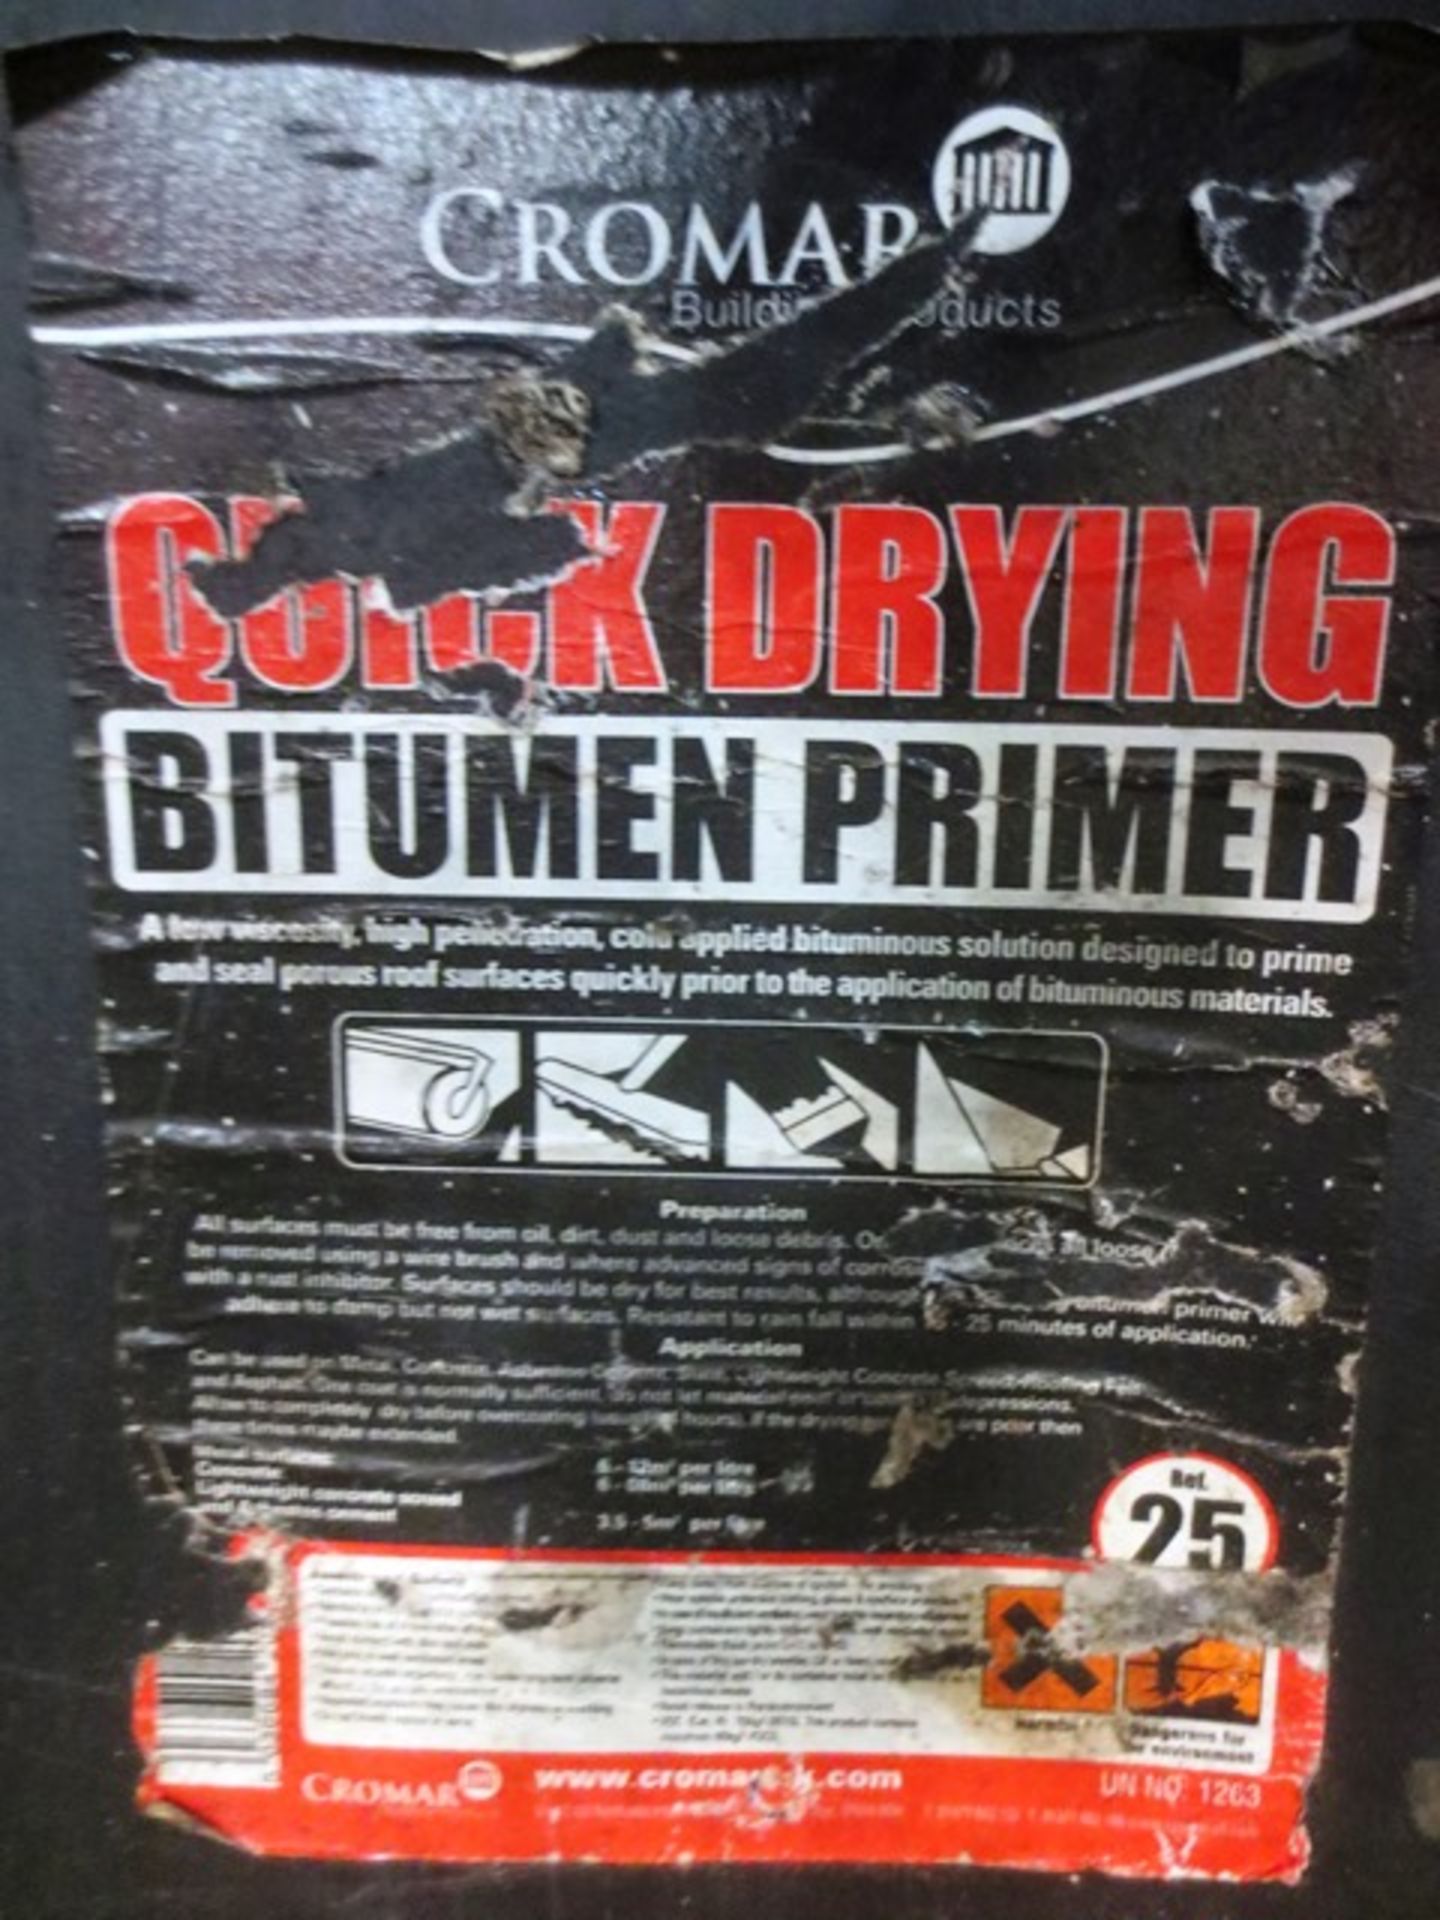 Two Cromar quick dry bitumen primer, 25 litres) - Image 2 of 2